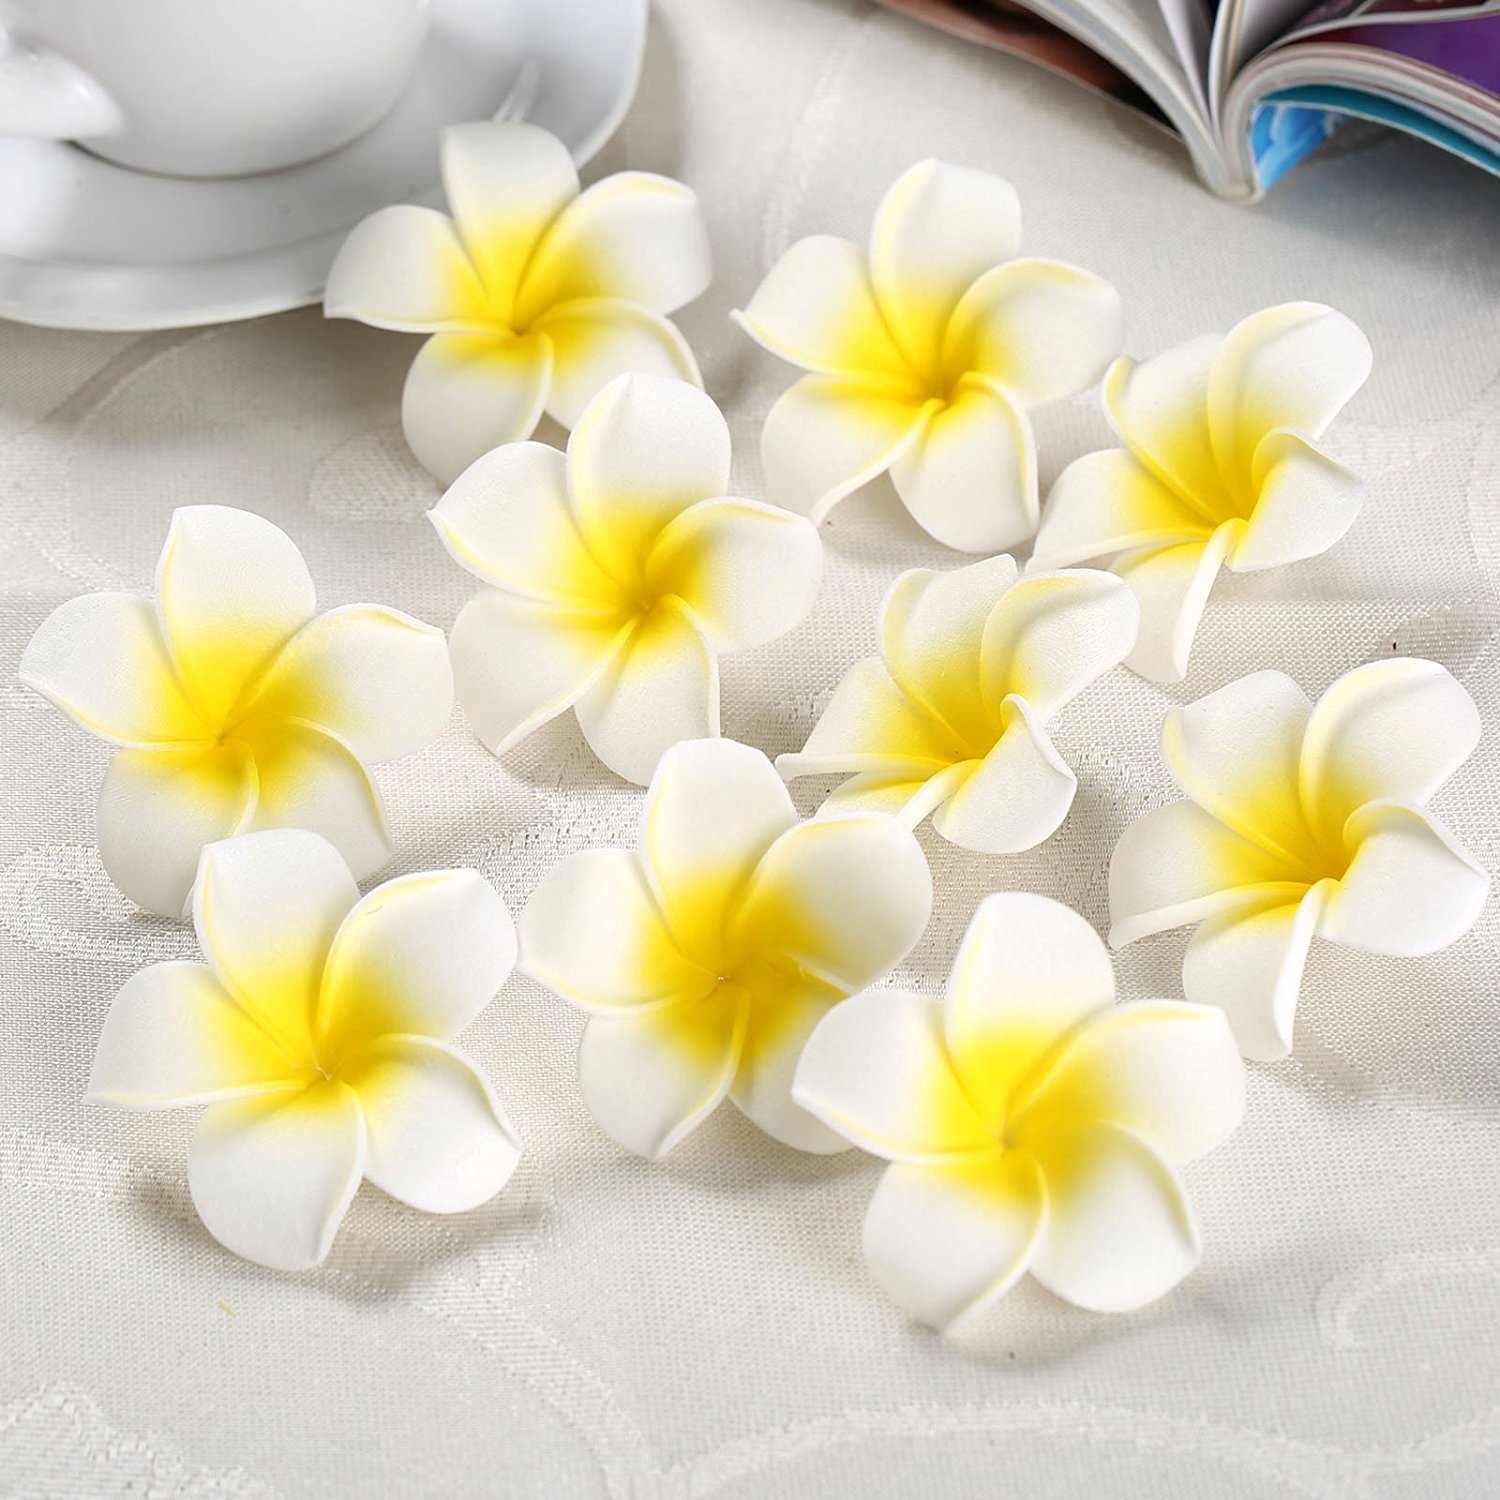 Amazon.com: 10pcs Artifical Foam Frangipani Flower Fake Plumeria For ...